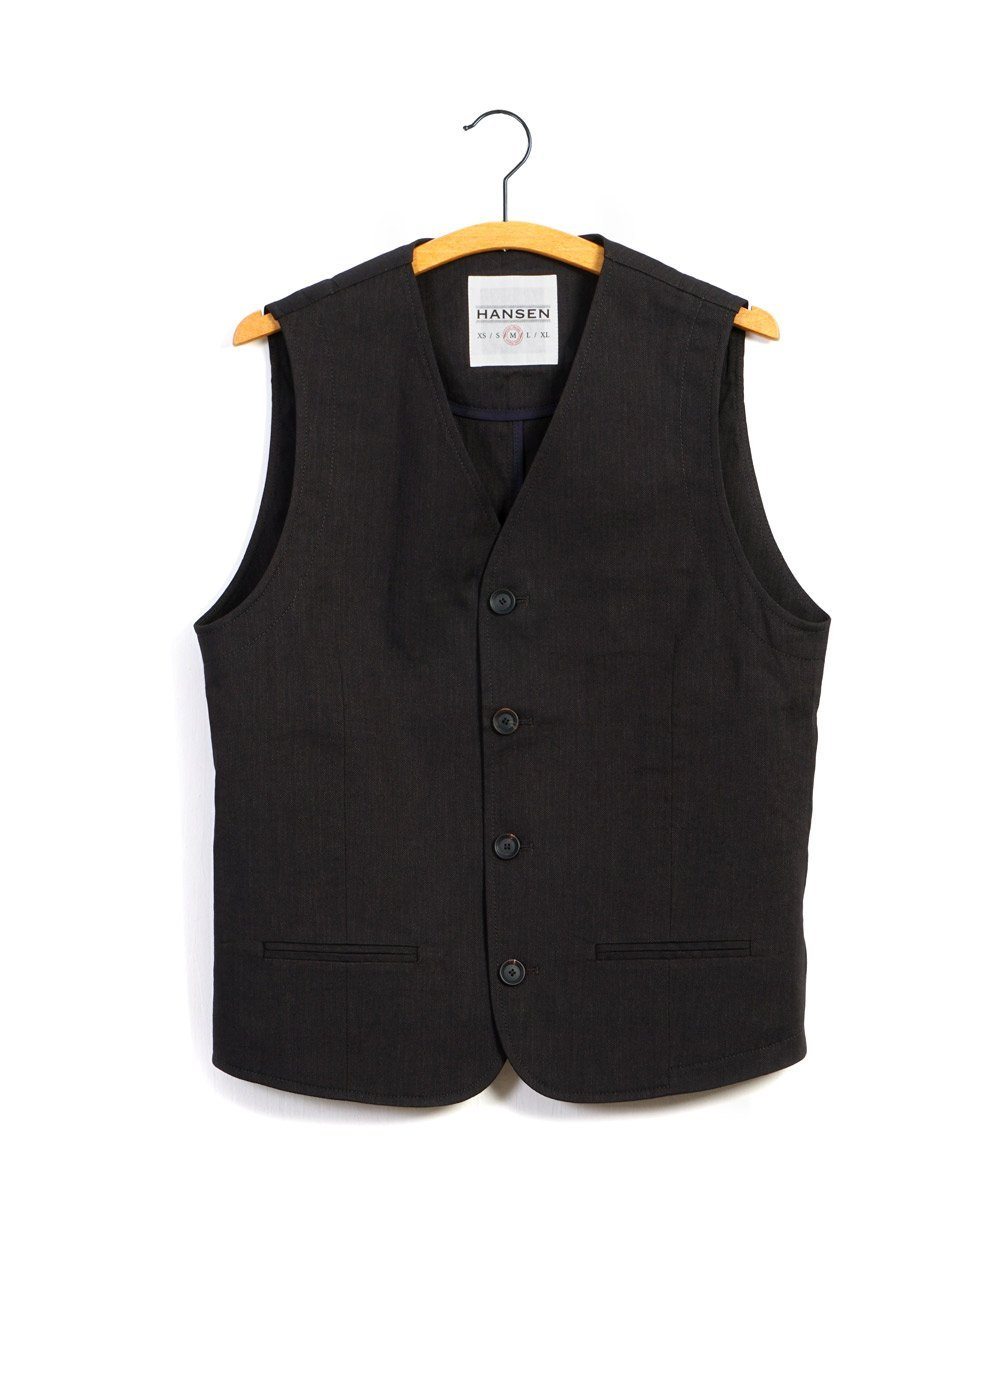 DANIEL | Four Button Waistcoat | Coffee Melange -HANSEN Garments- HANSEN Garments